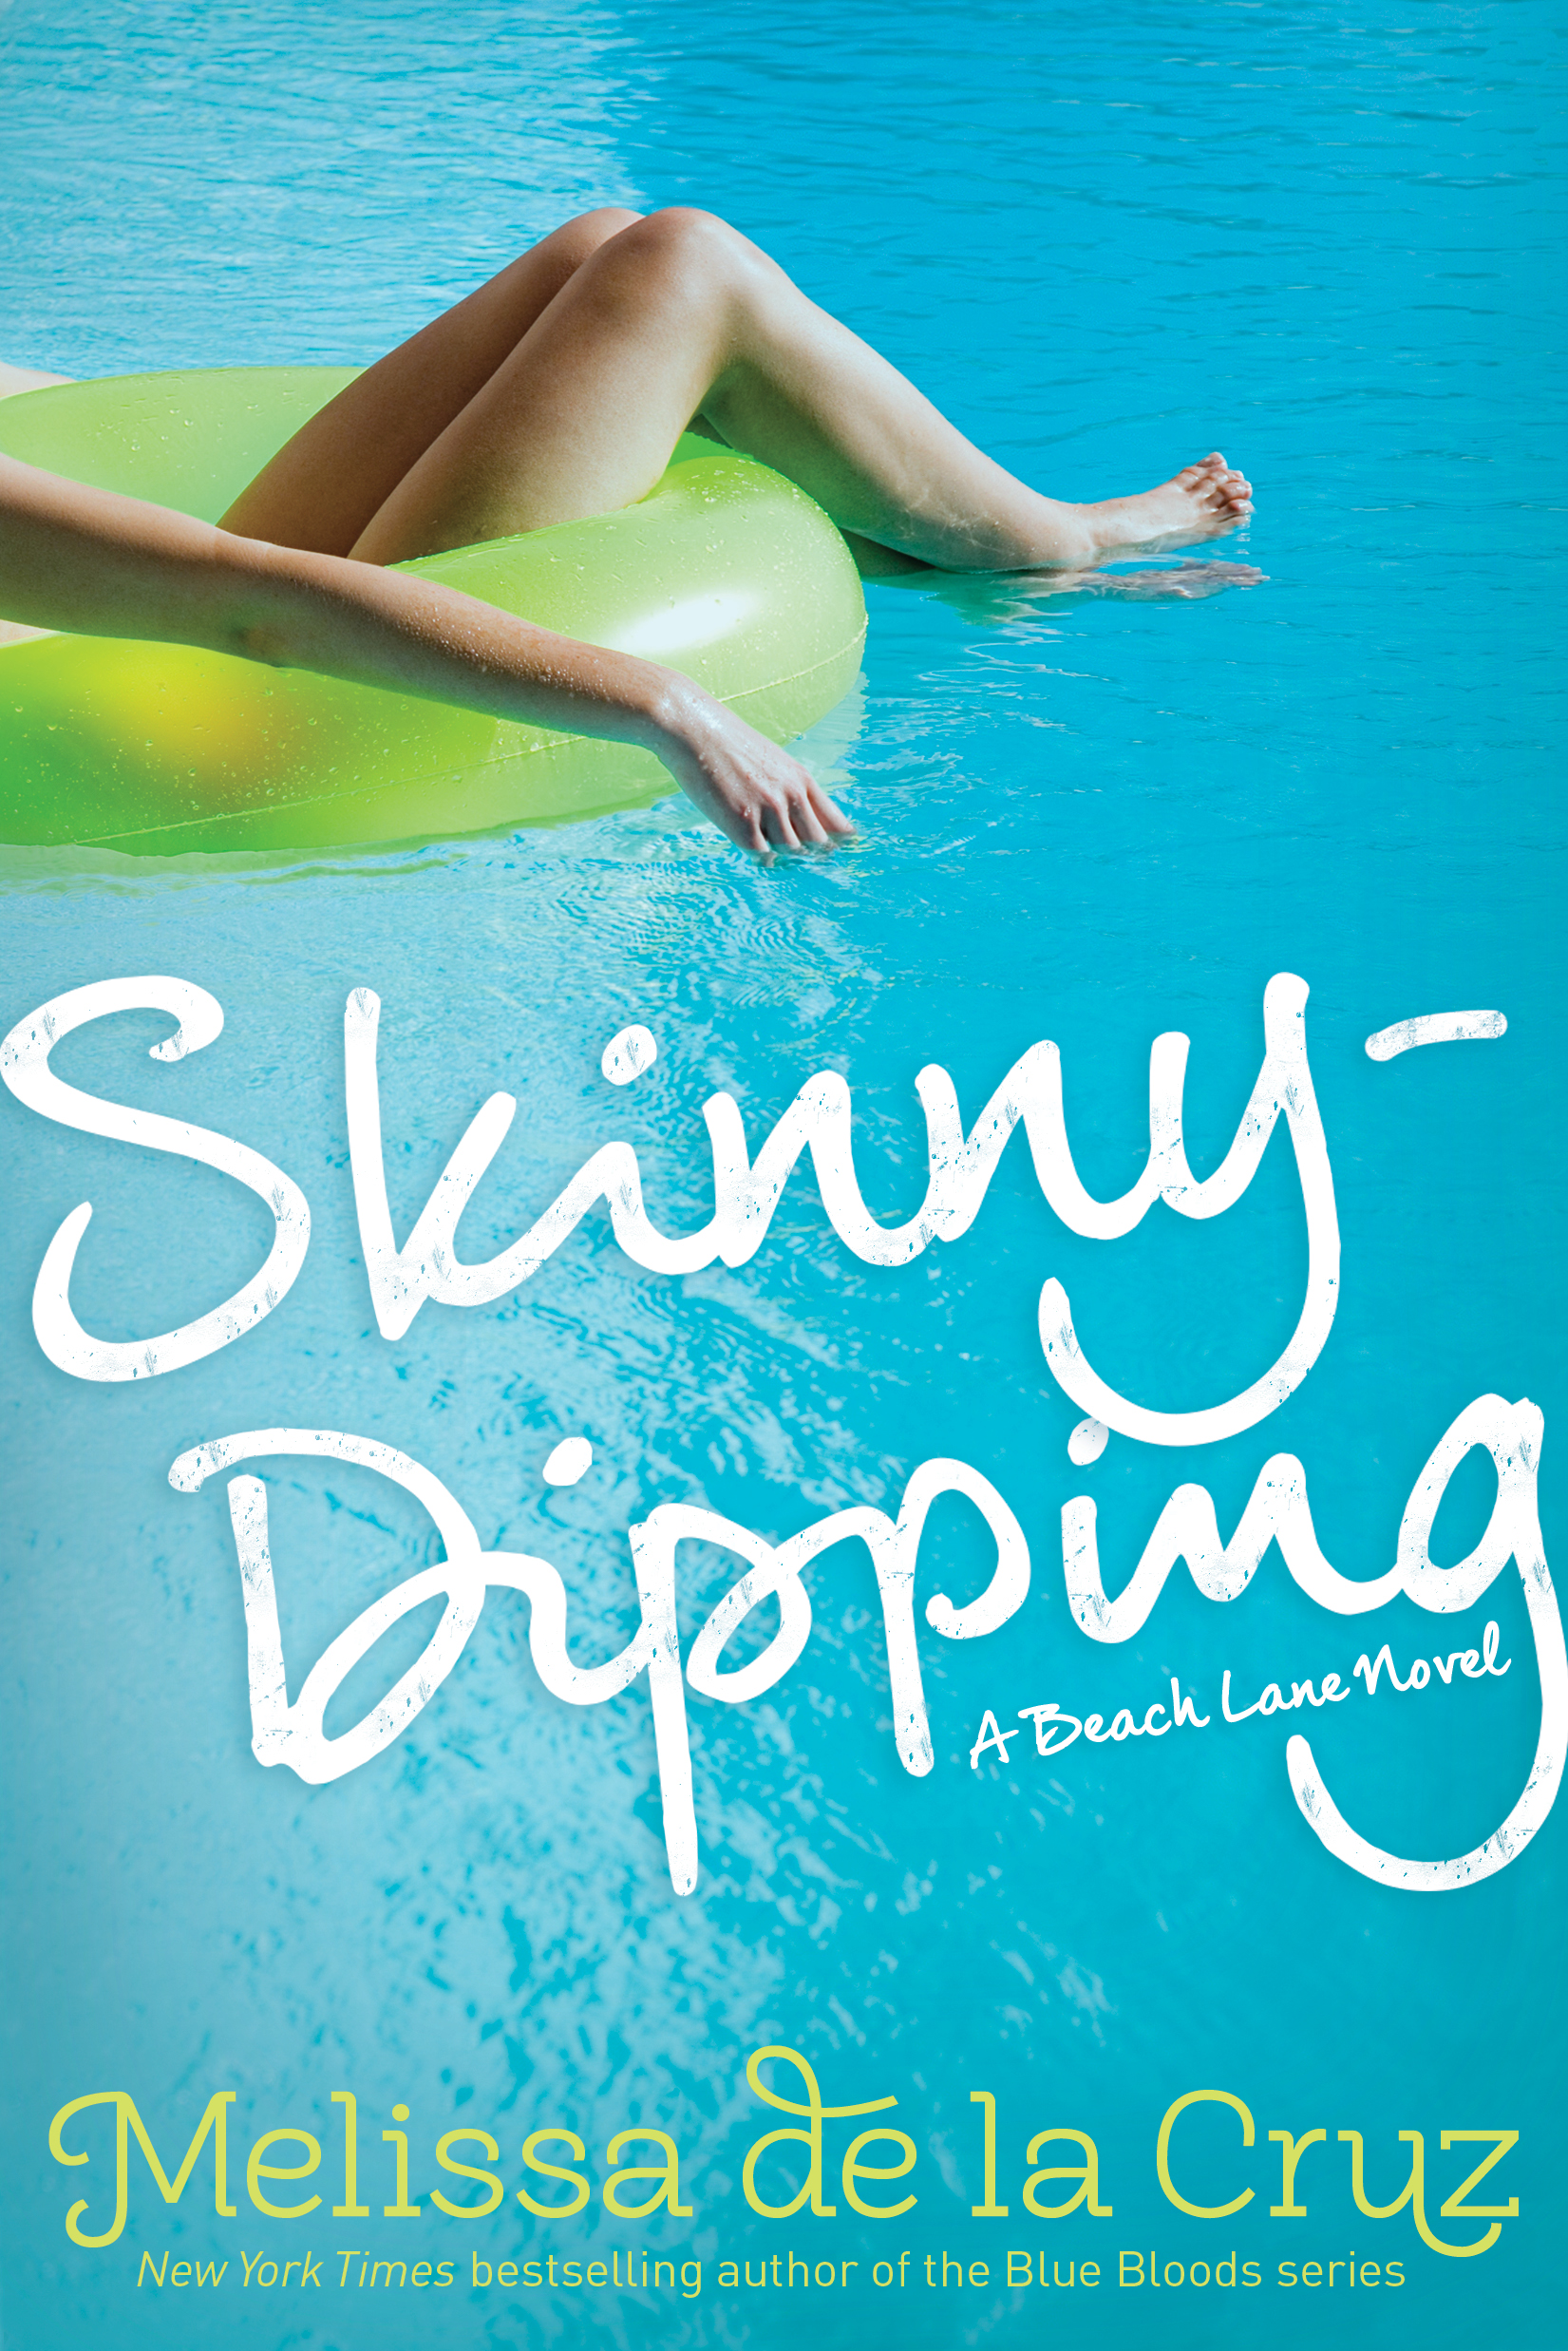 dennis castillo recommends Skinny Dipping Sex Stories